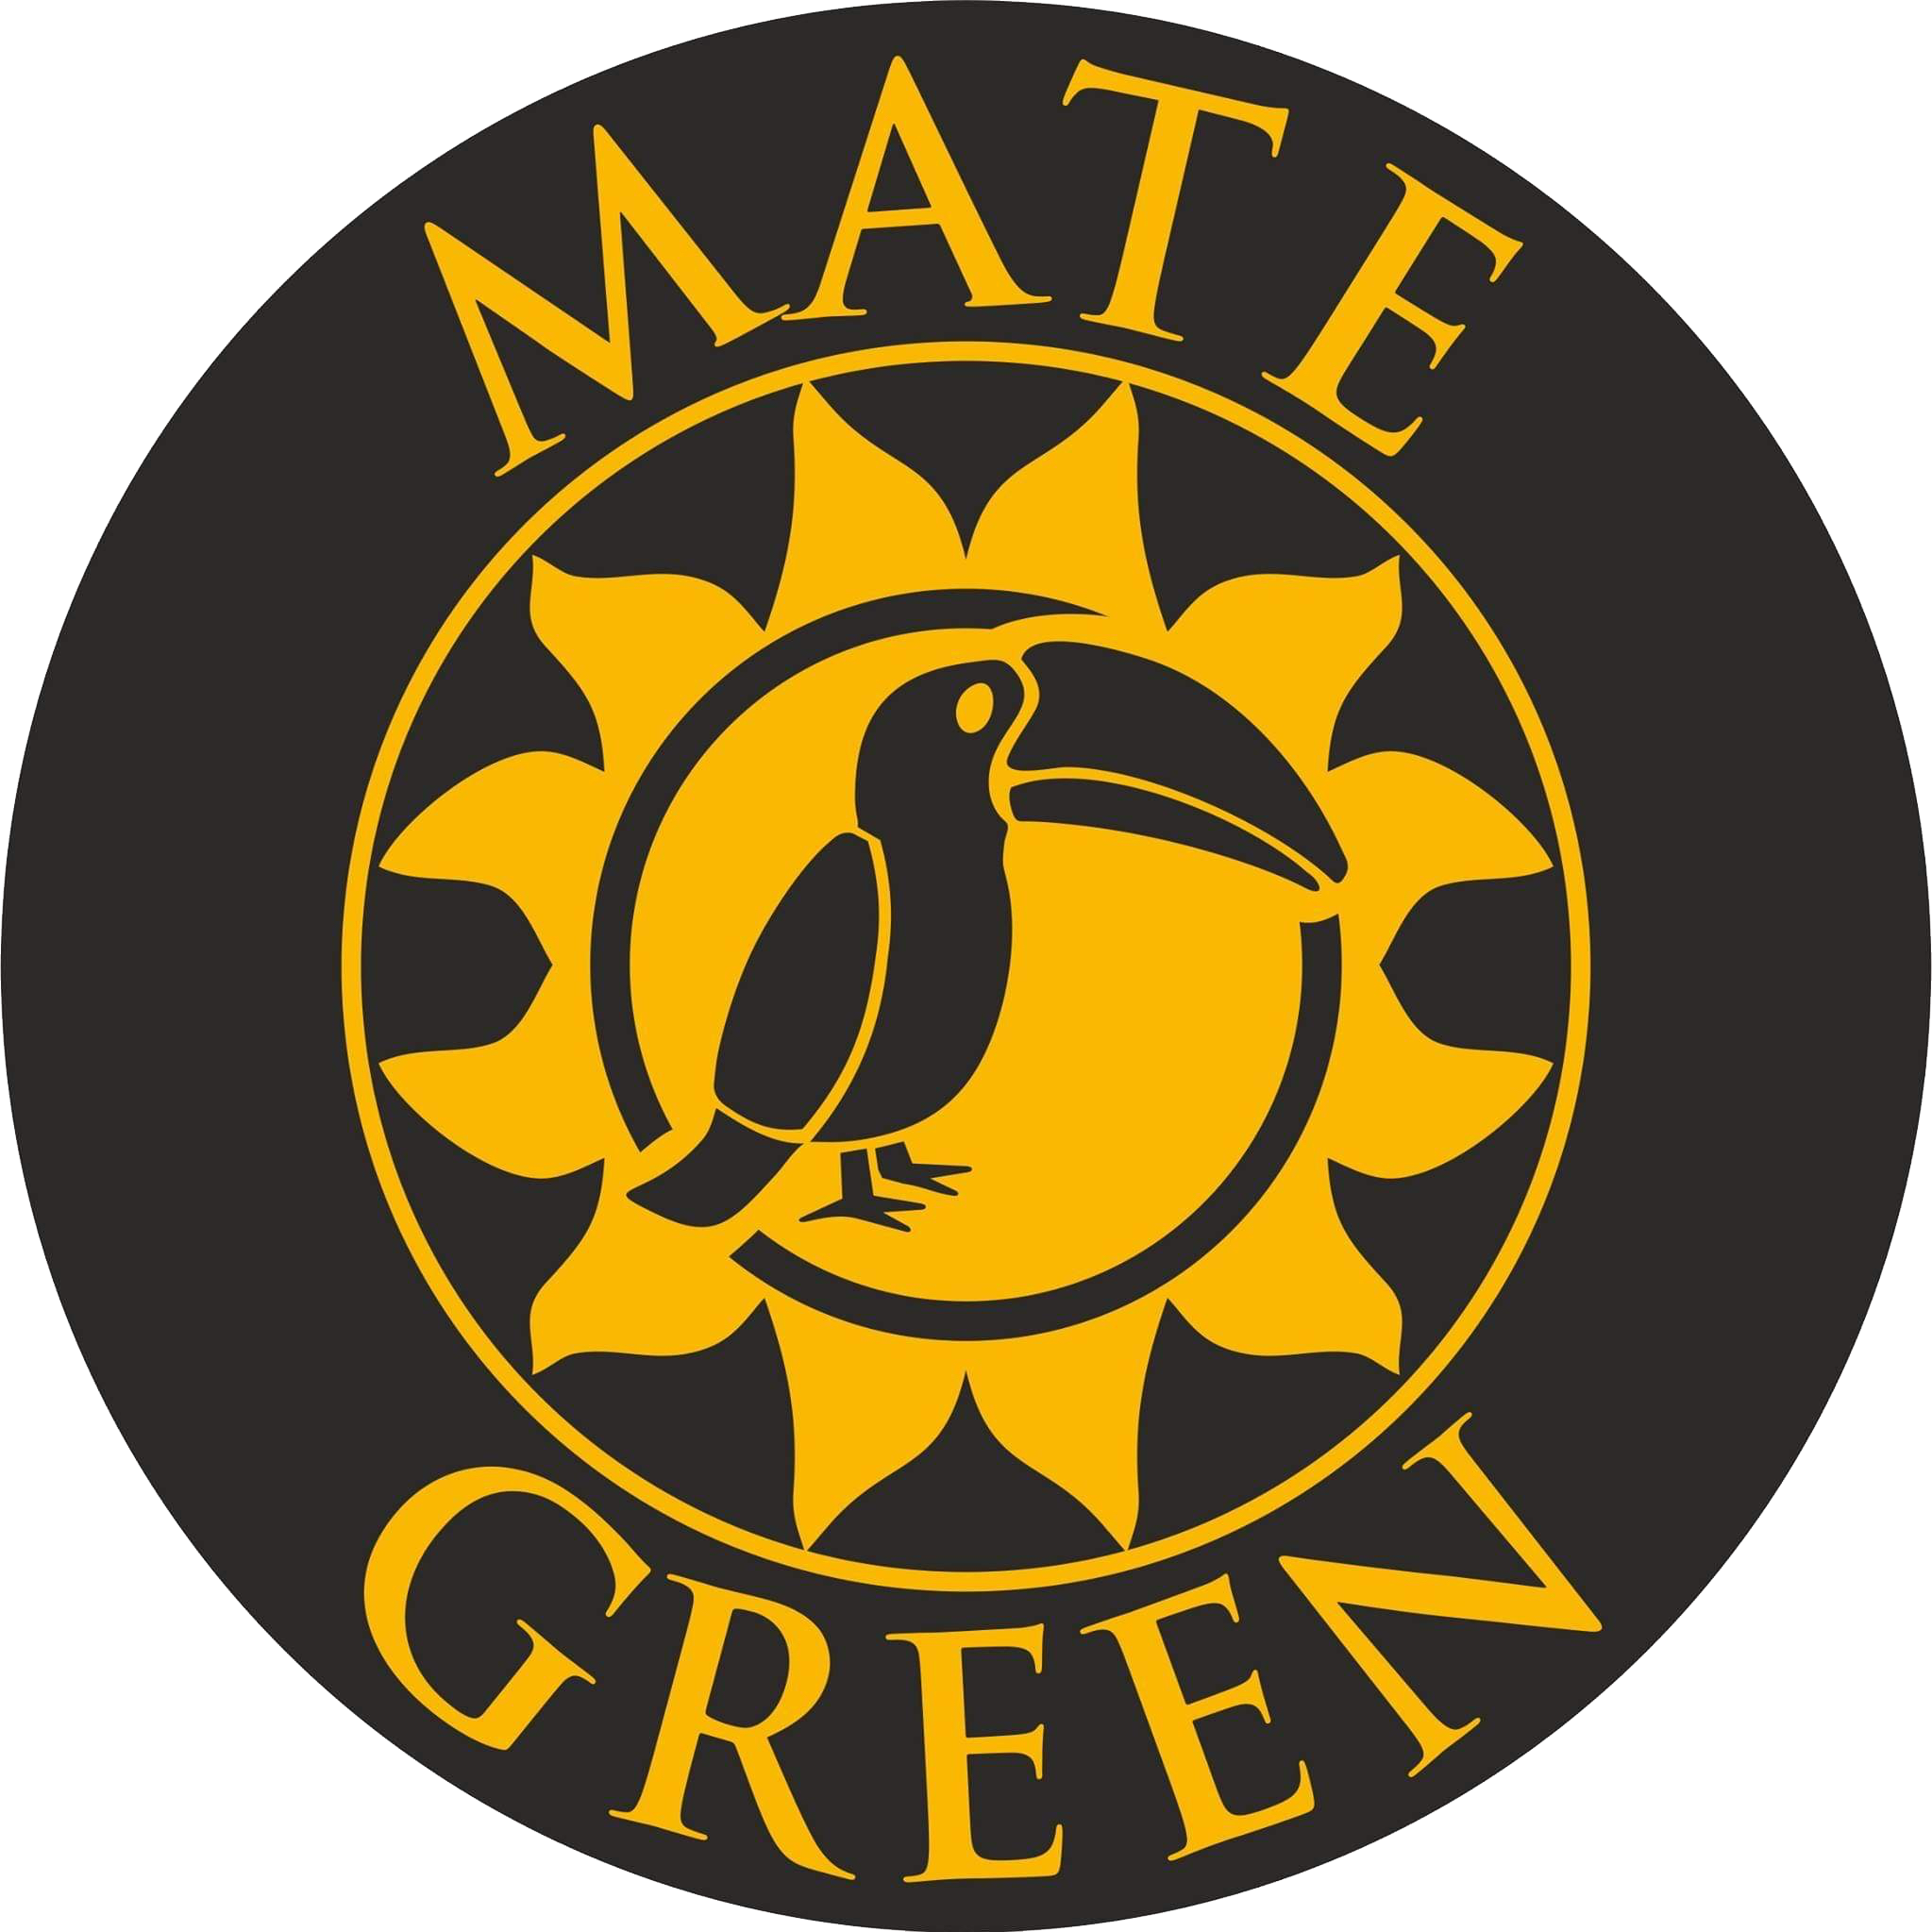 yerba mate green logo